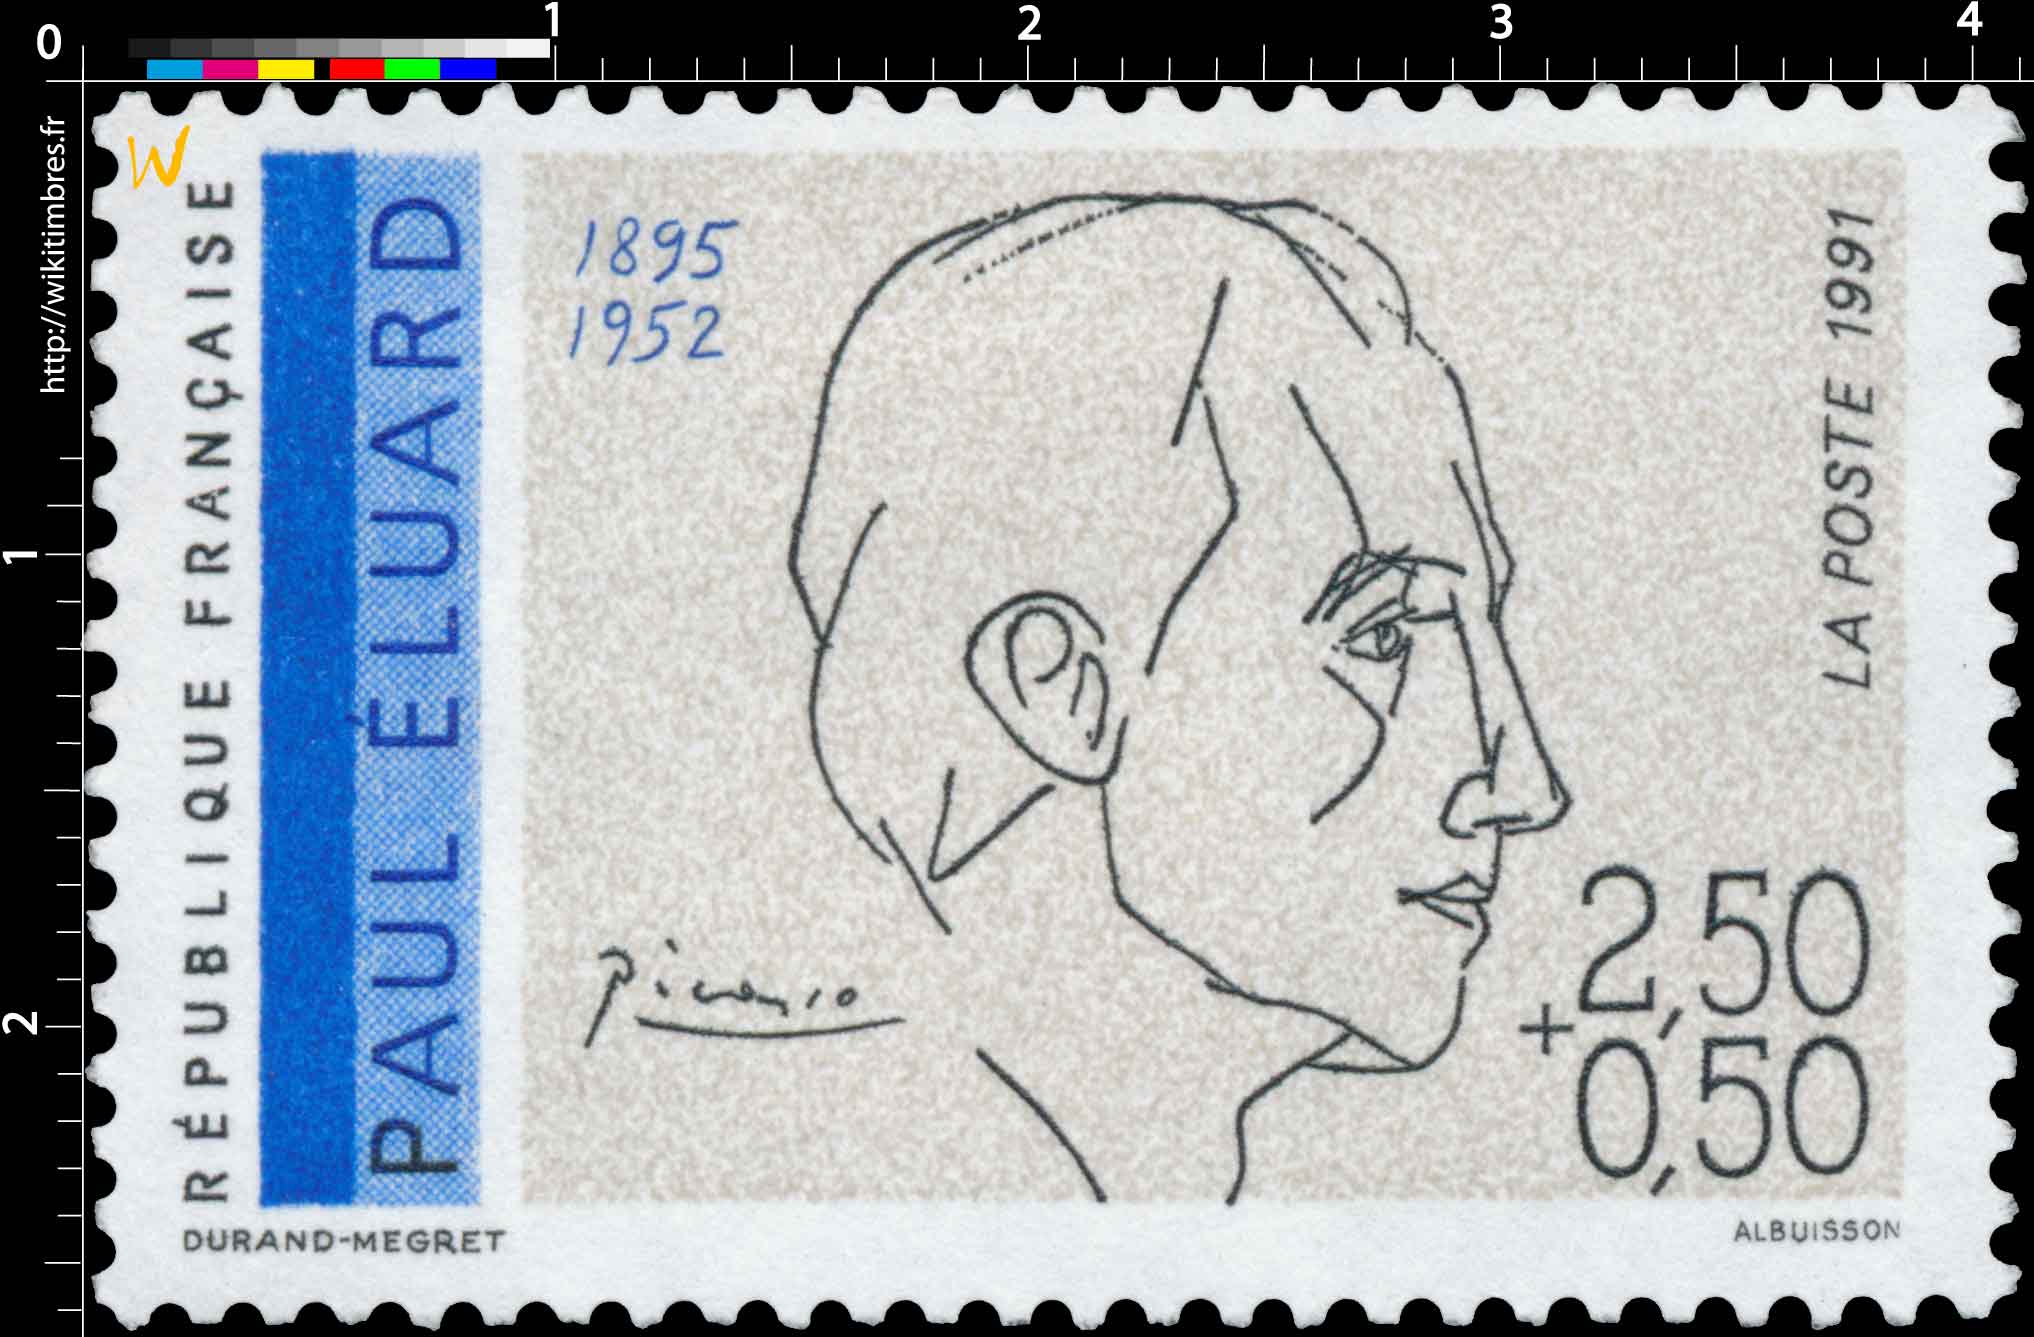 1991 PAUL ÉLUARD 1895-1952